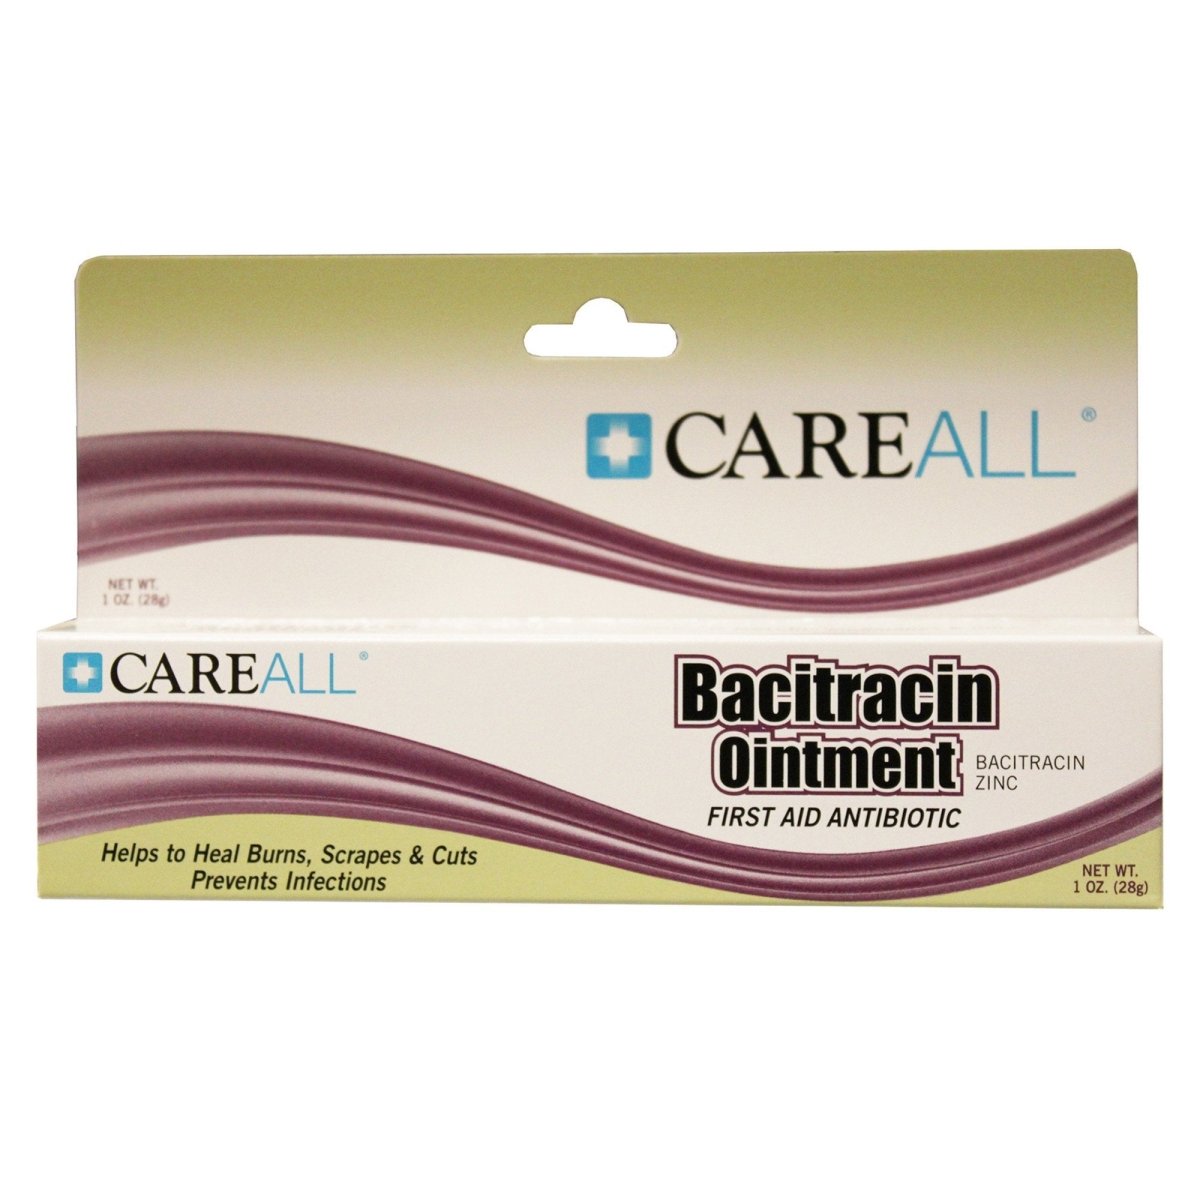 Careall Bacitracin First Aid Antibiotic